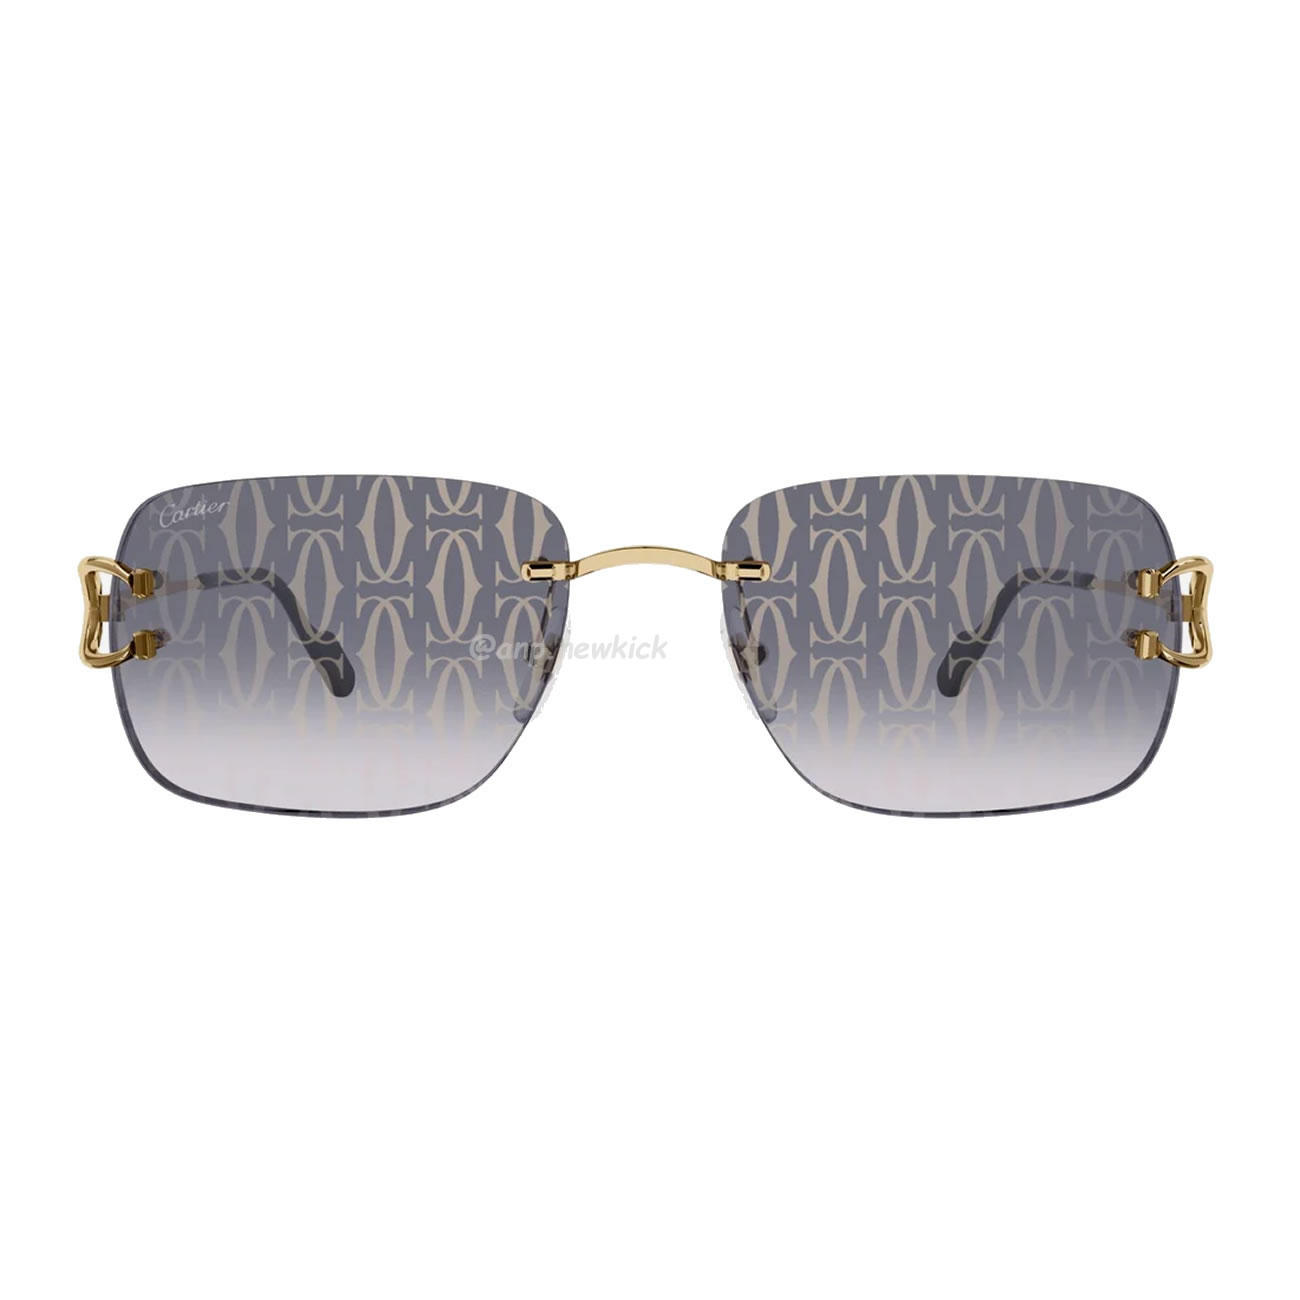 Cartier Eyewear Rimless Rectangle Frame Sunglasses (11) - newkick.org